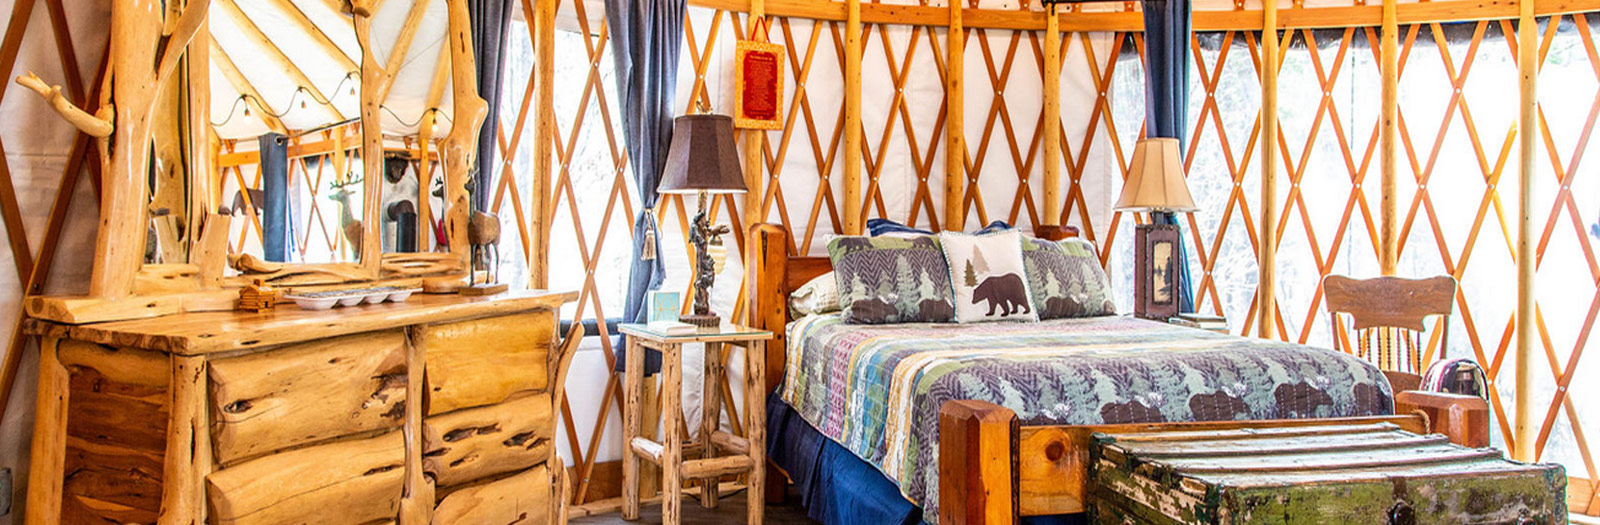 Yurtsville yurt vacation rental airbnb vrbo close to Glacier National Park